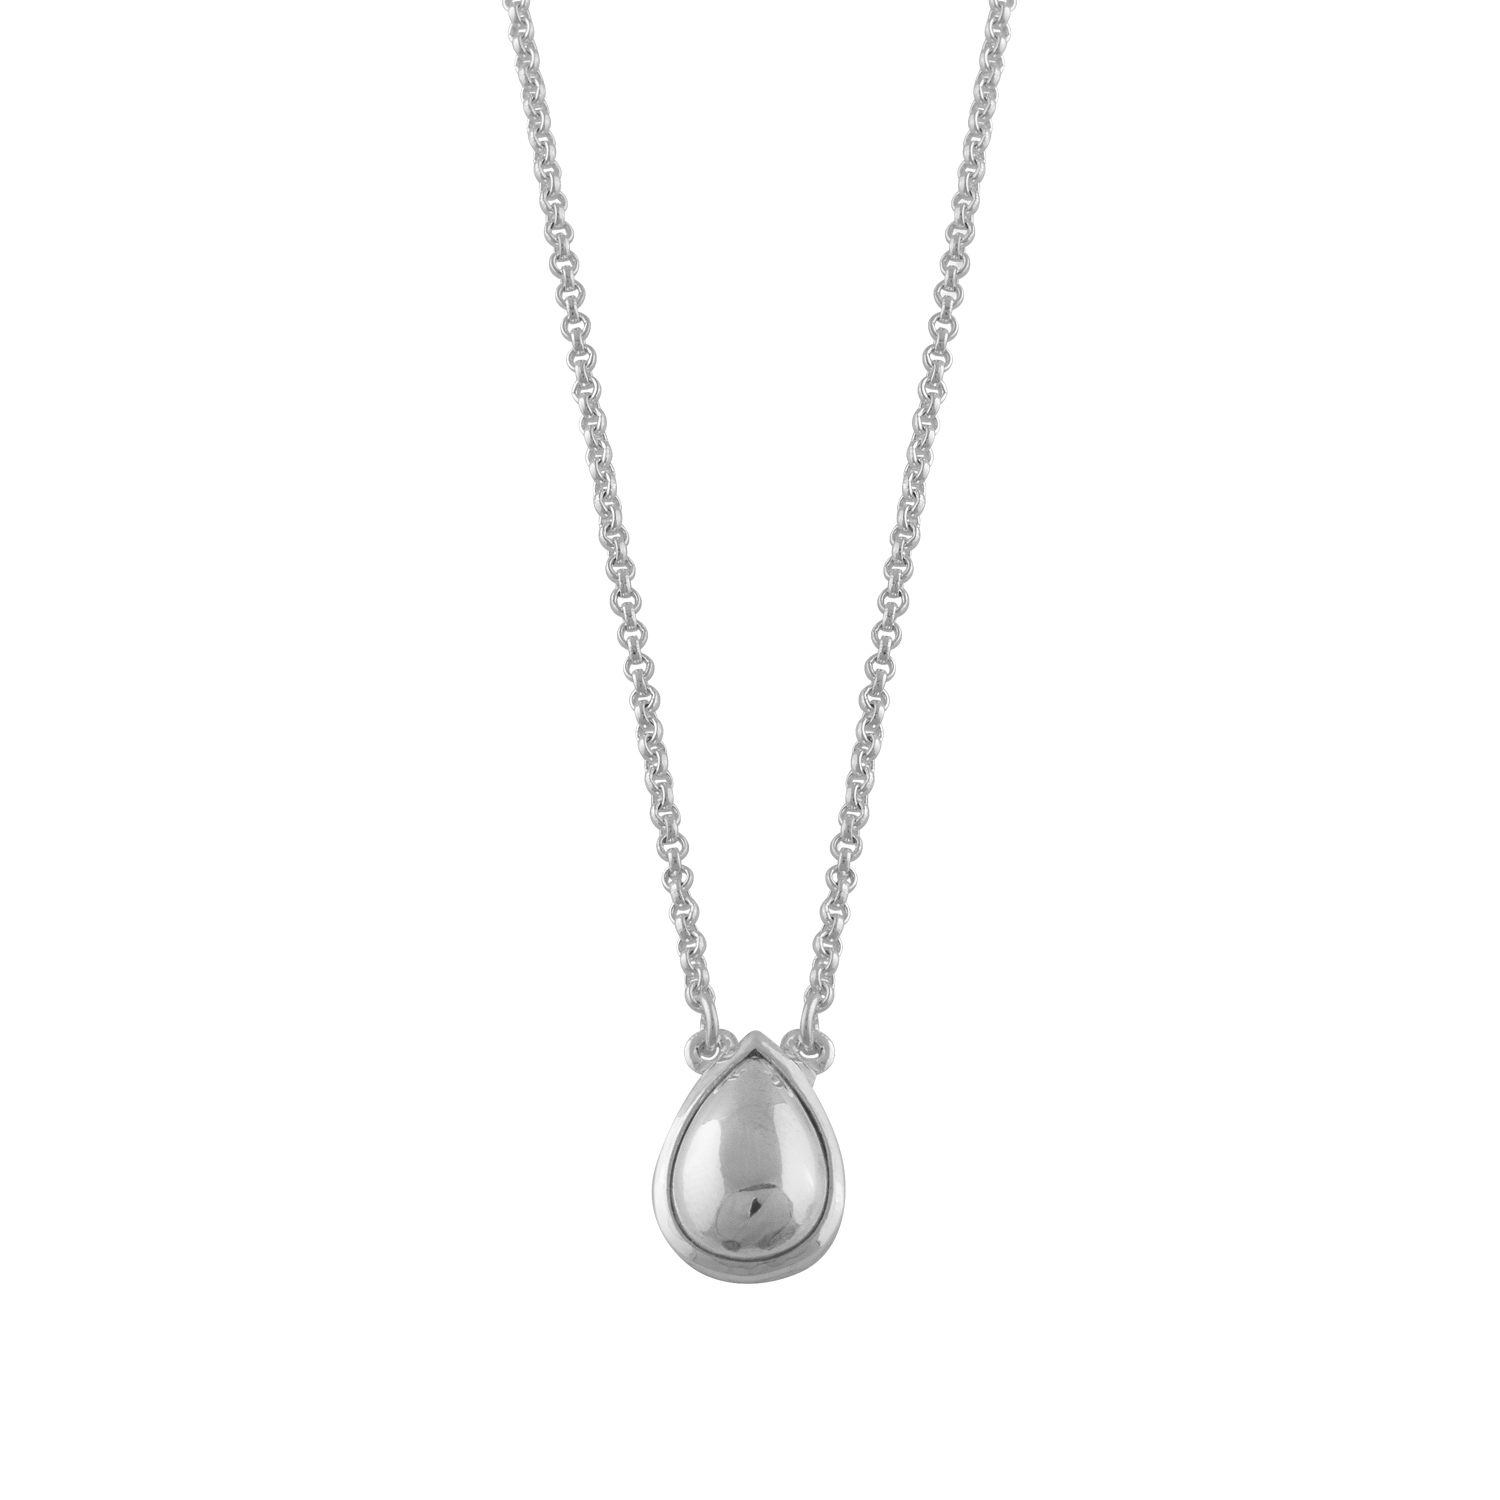 Belcher necklace with large silver pendant - Von Treskow